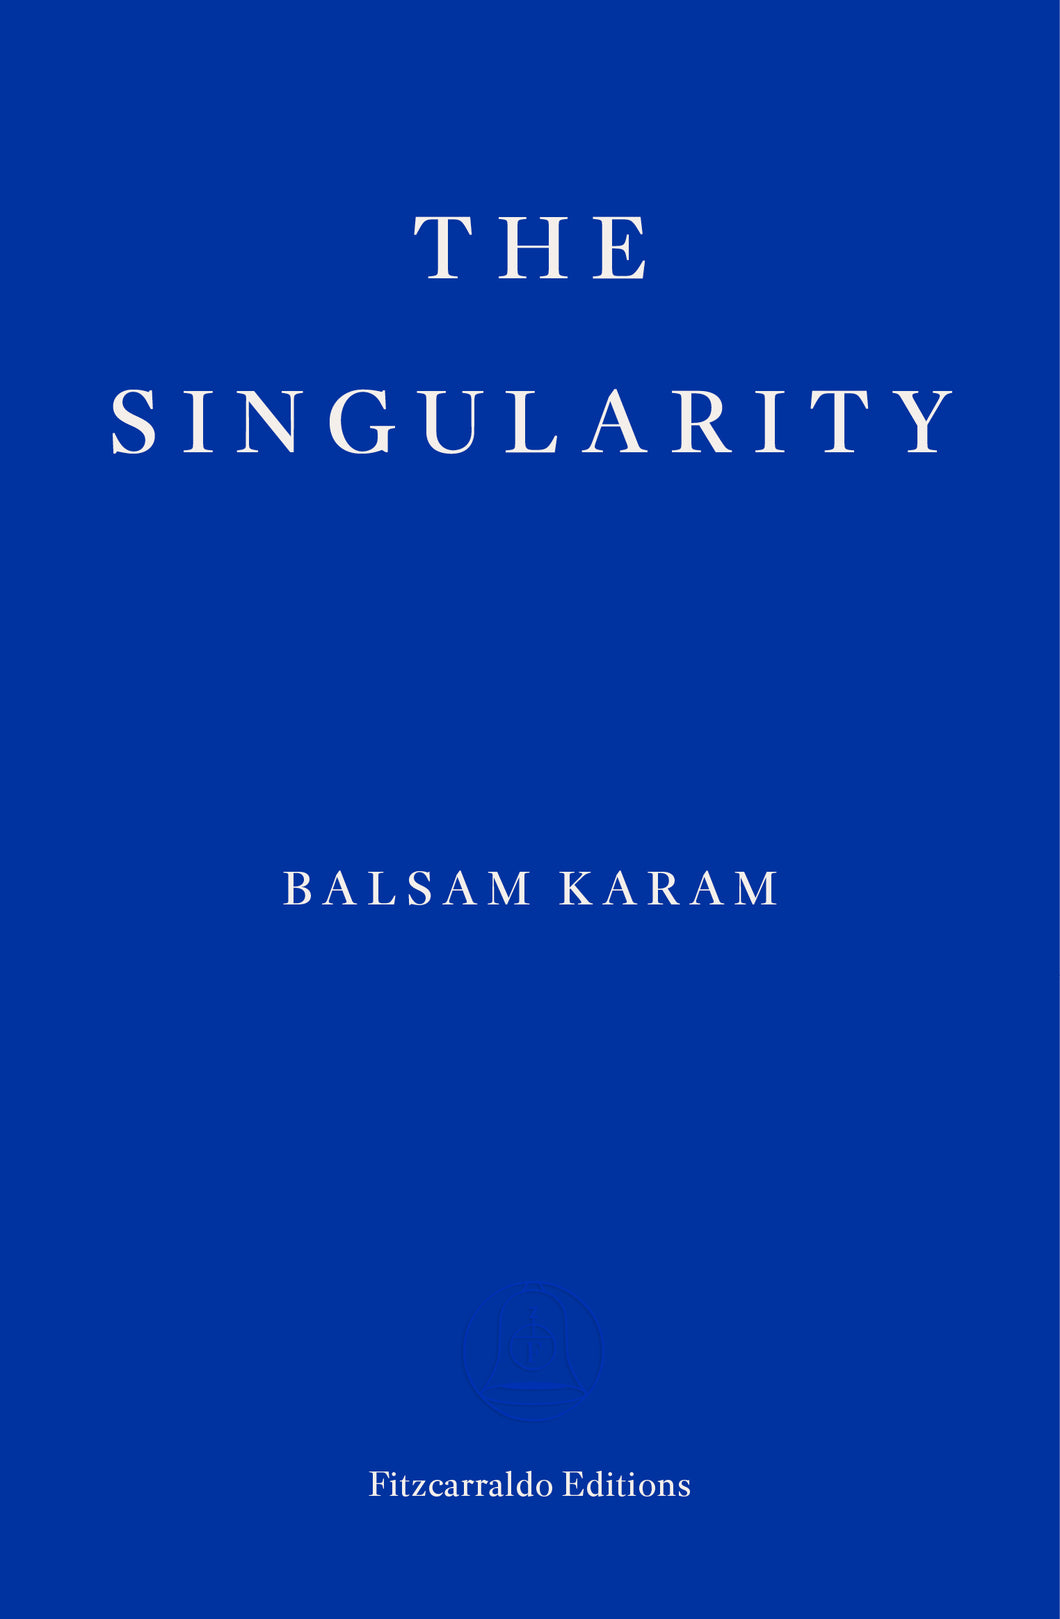 Conversation: The Singularity by Balsam Karam with Helen Charman